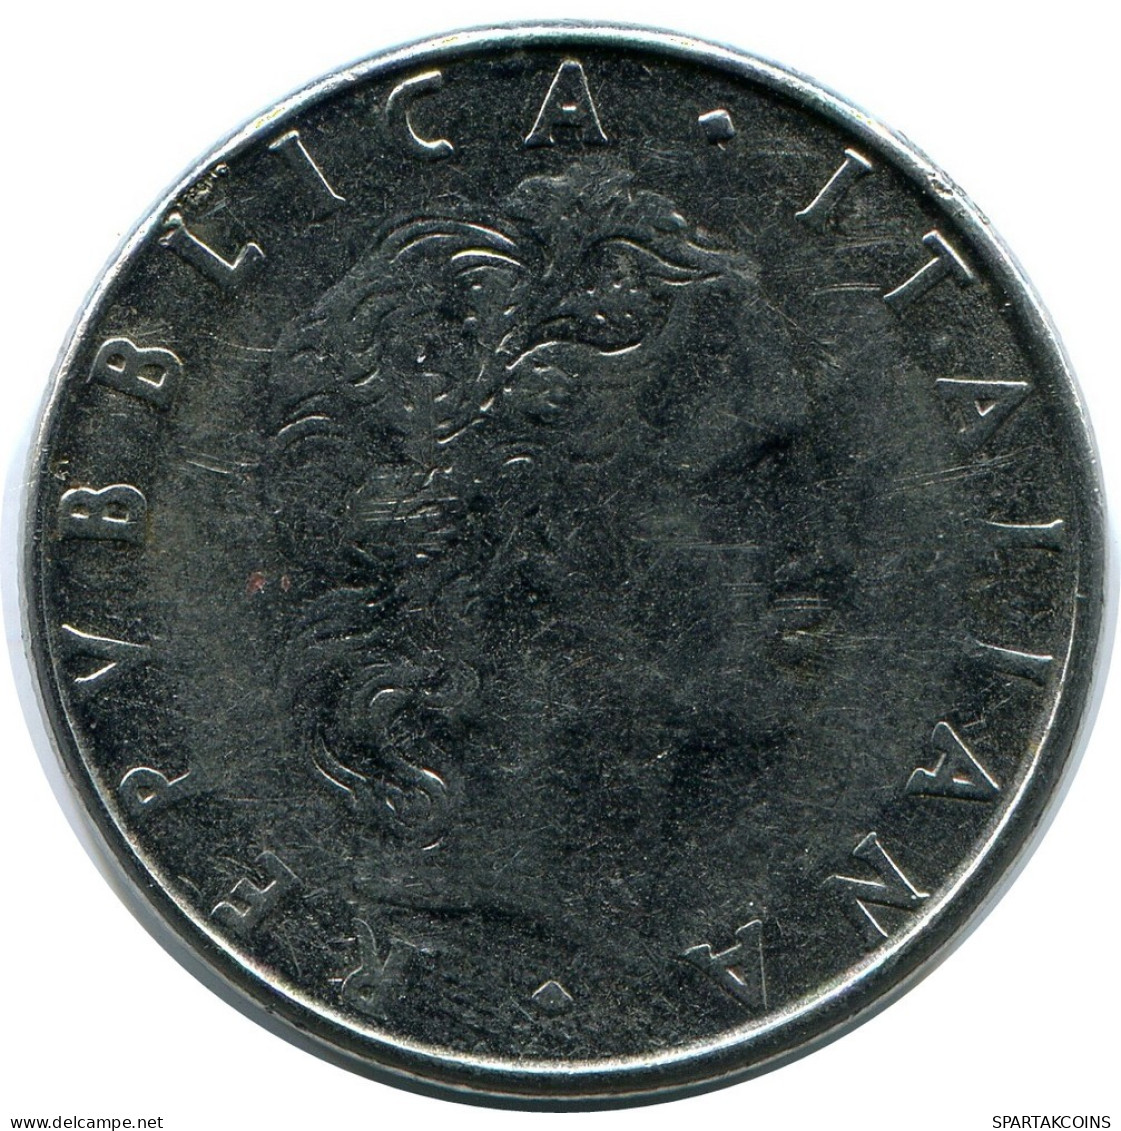 100 LIRE 1982 ITALY Coin #AZ494.U.A - 100 Lire